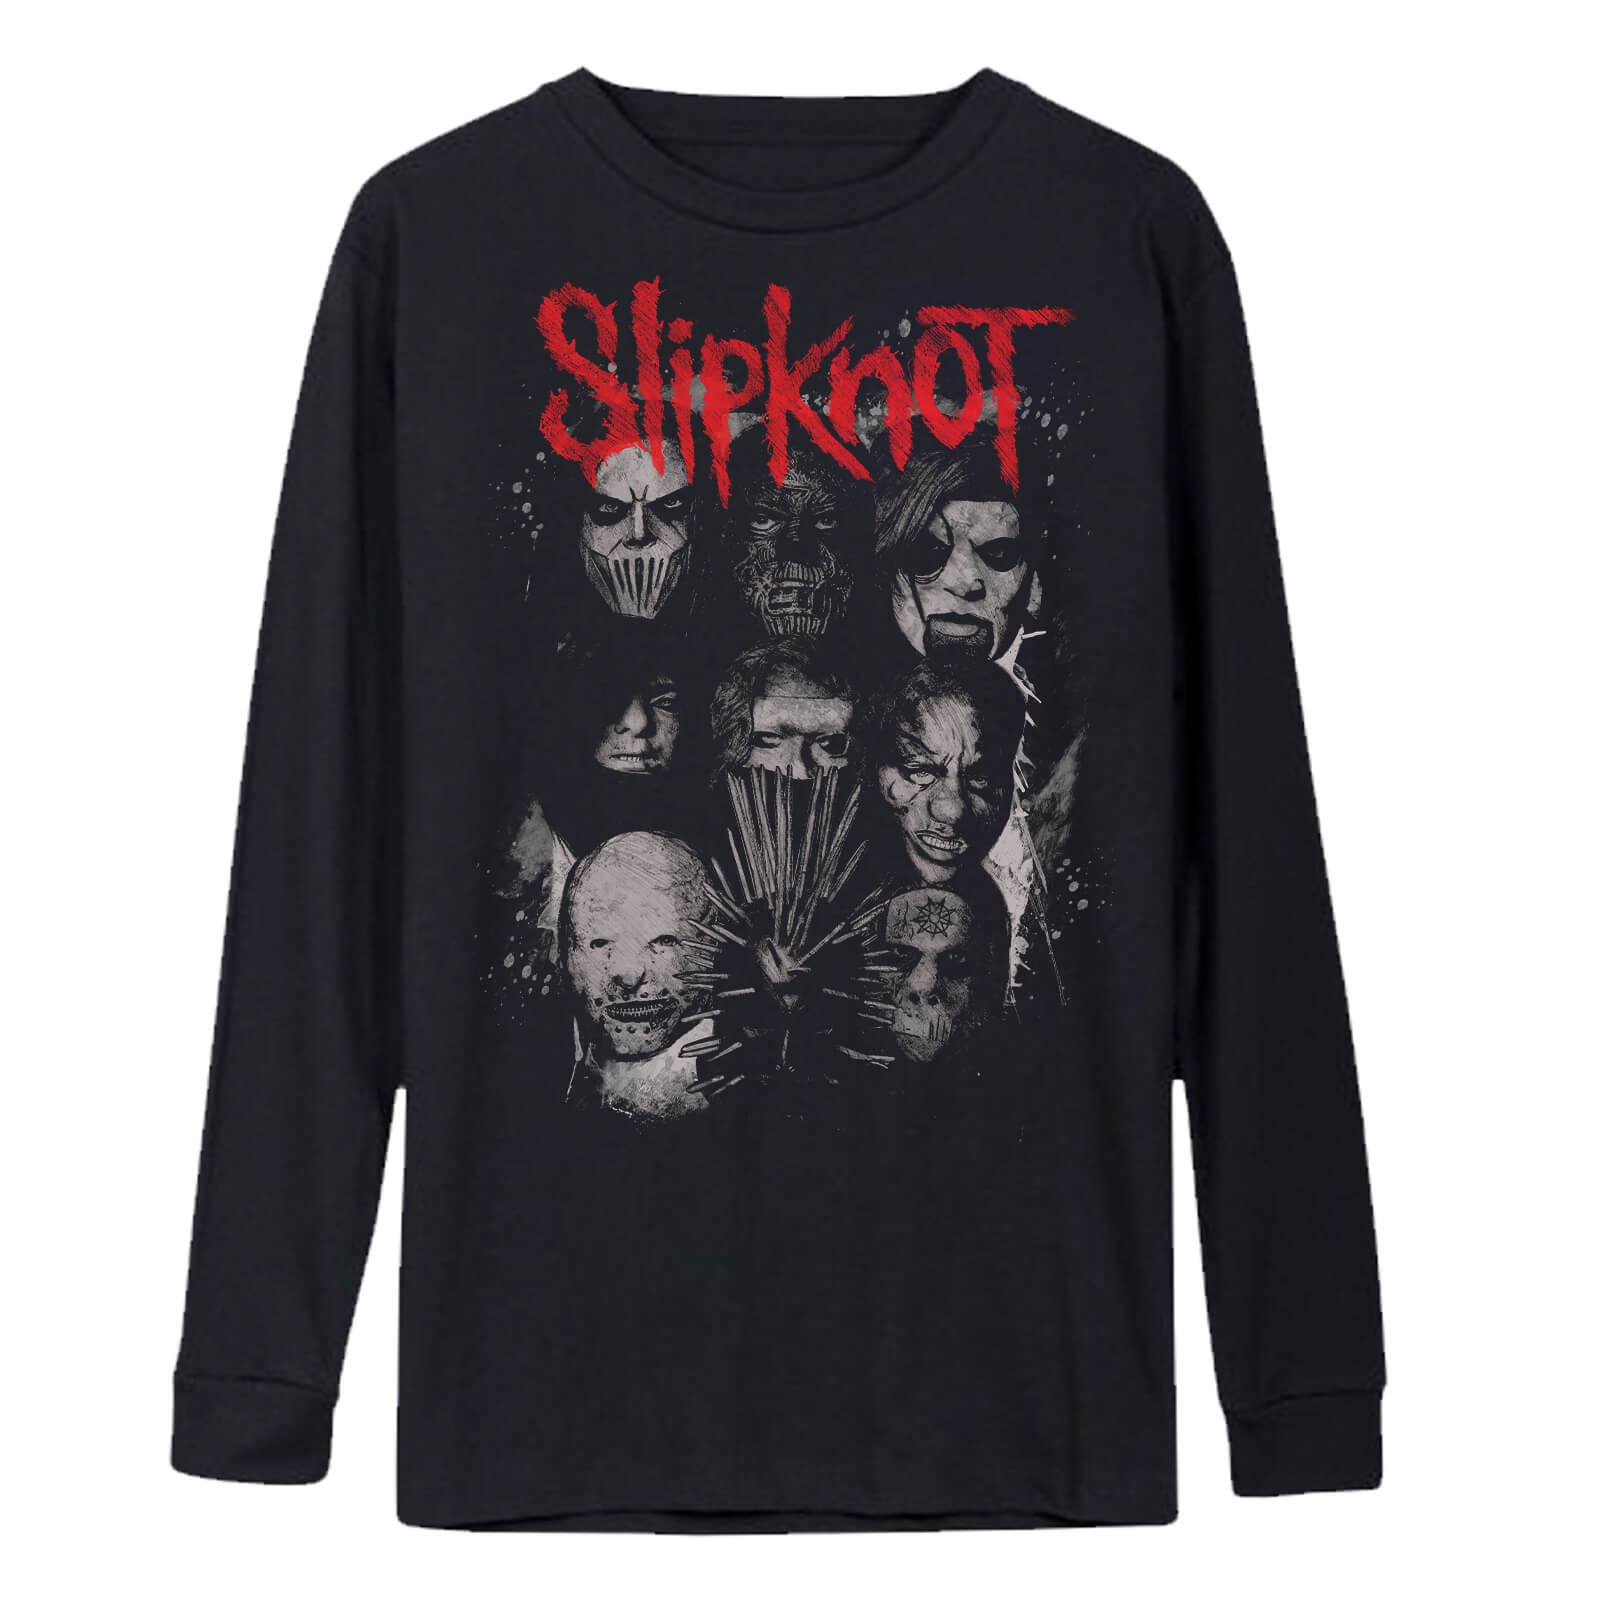 Slipknot We Are Not Your Kind Long Sleeve T-Shirt - Black - M - Black